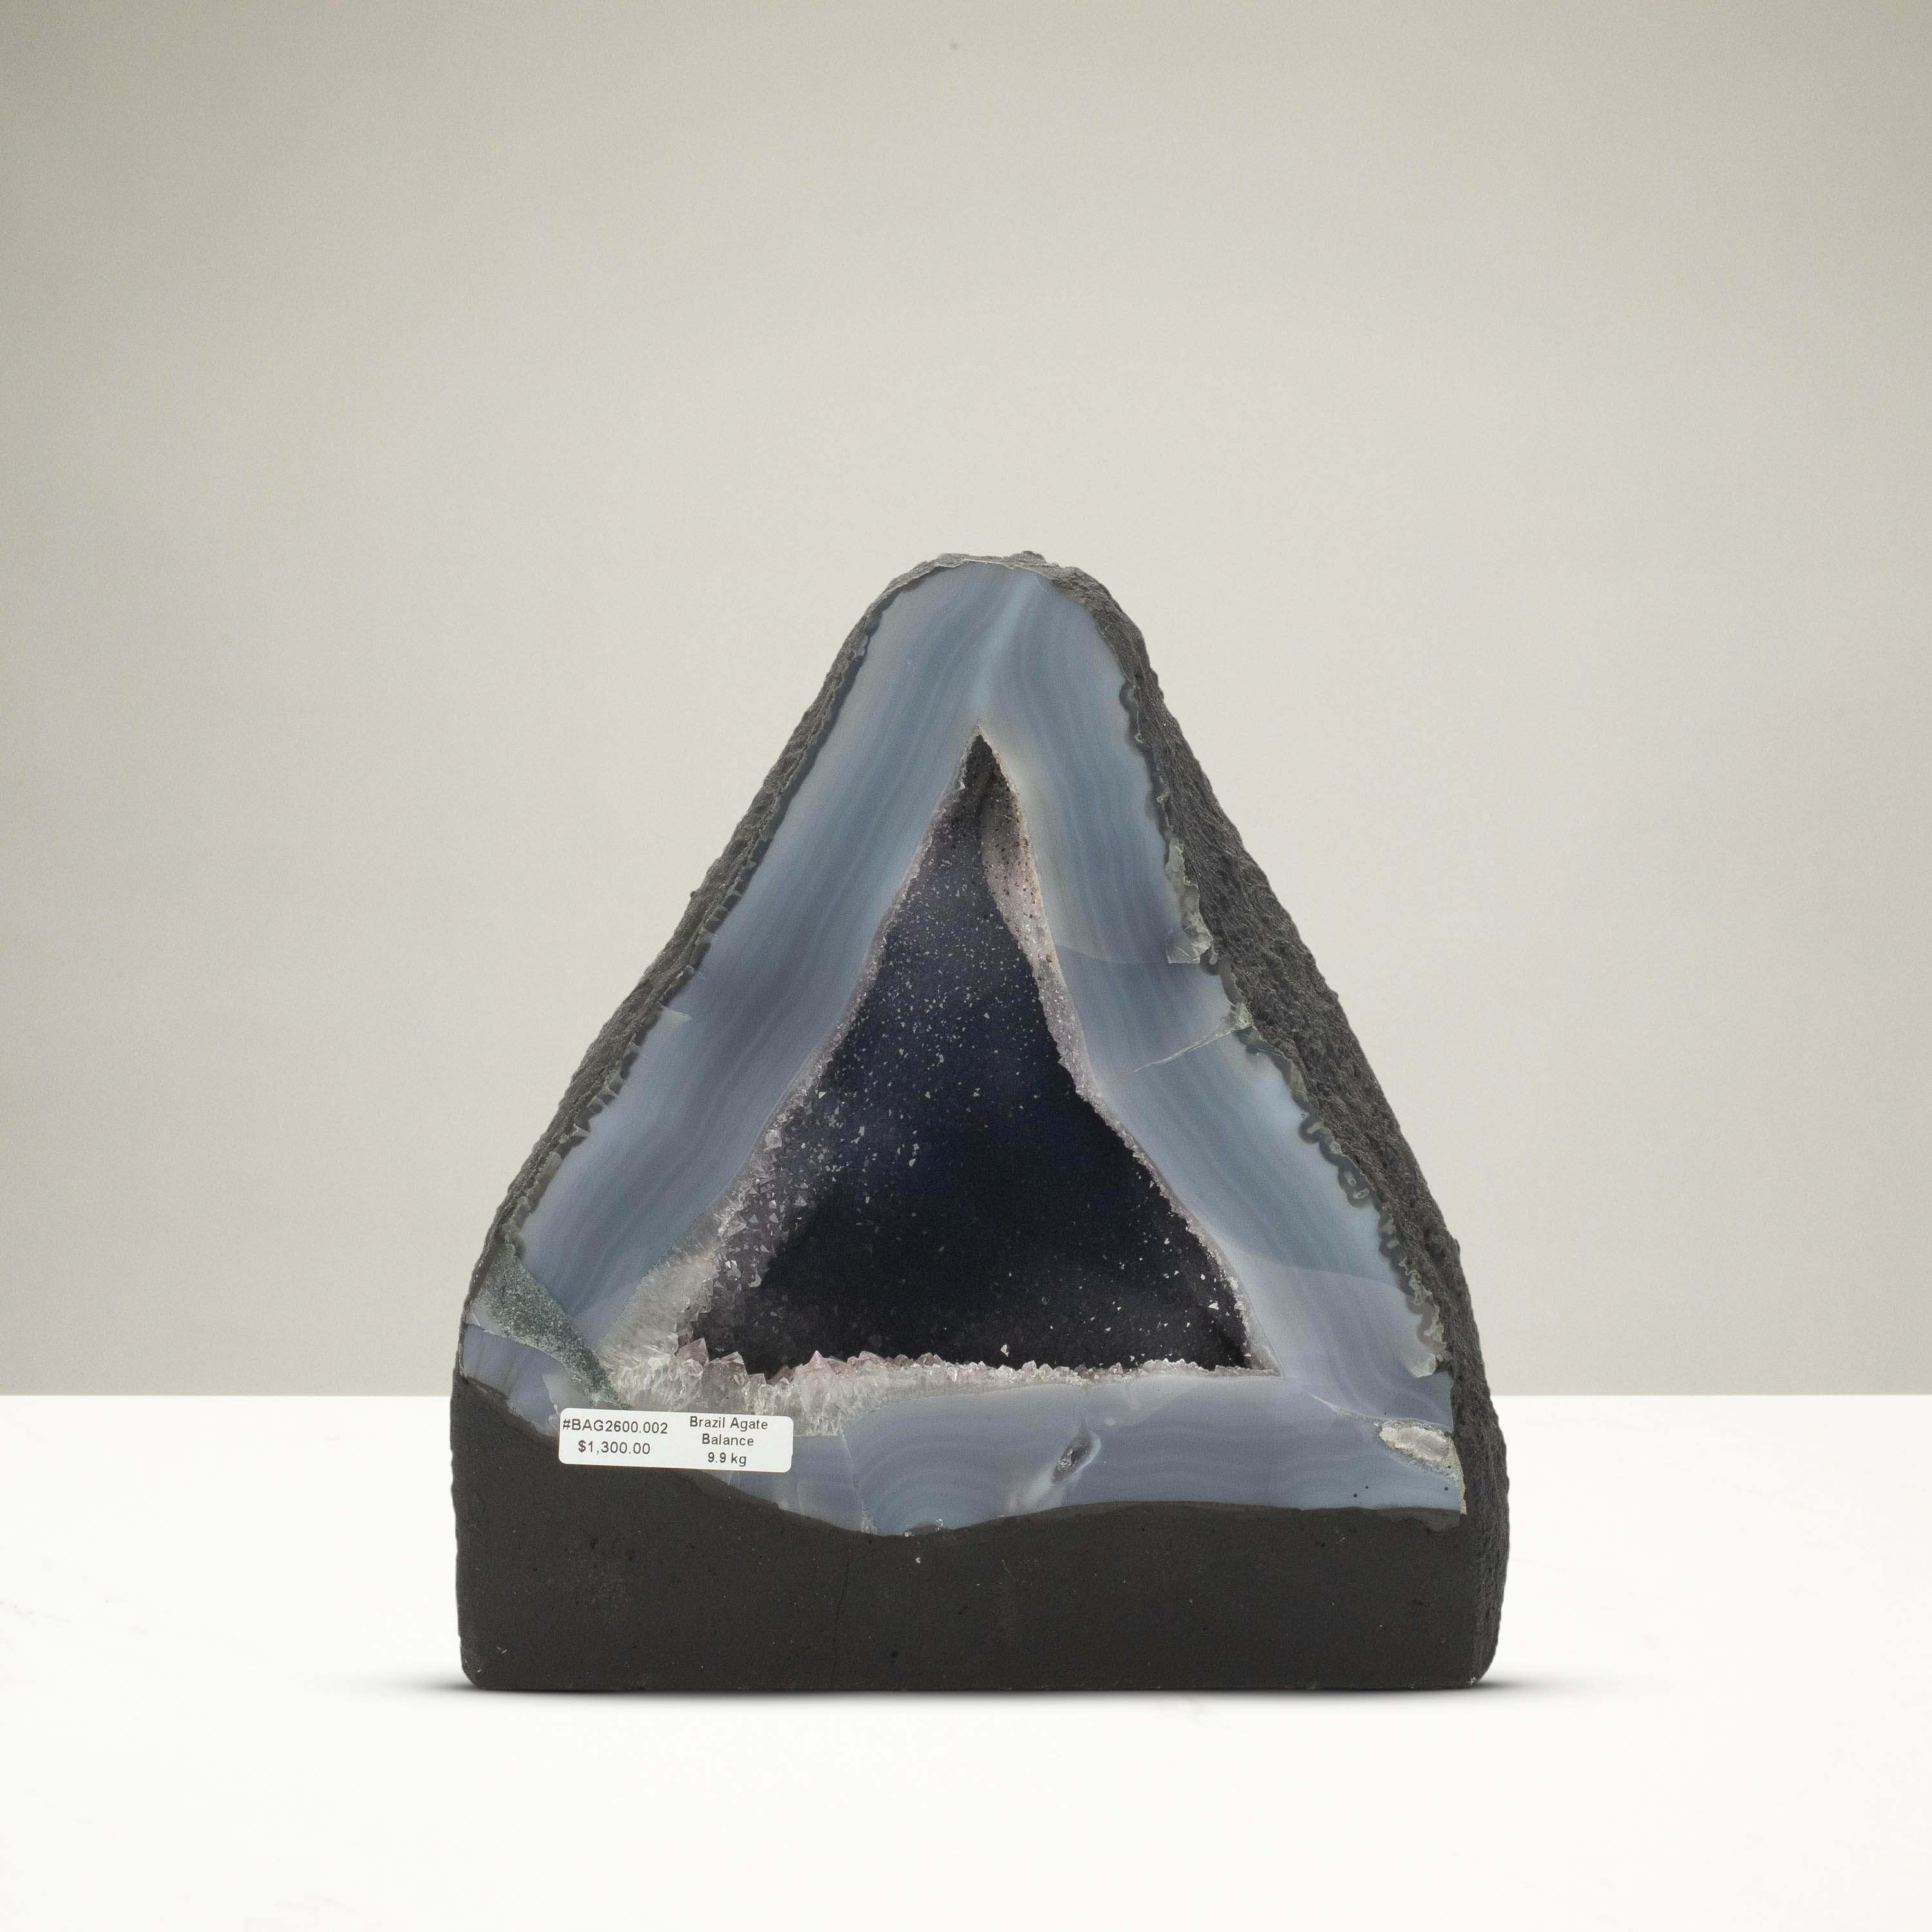 Kalifano Agate Agate Geode - 9 in. / 22 lbs BAG2600.002